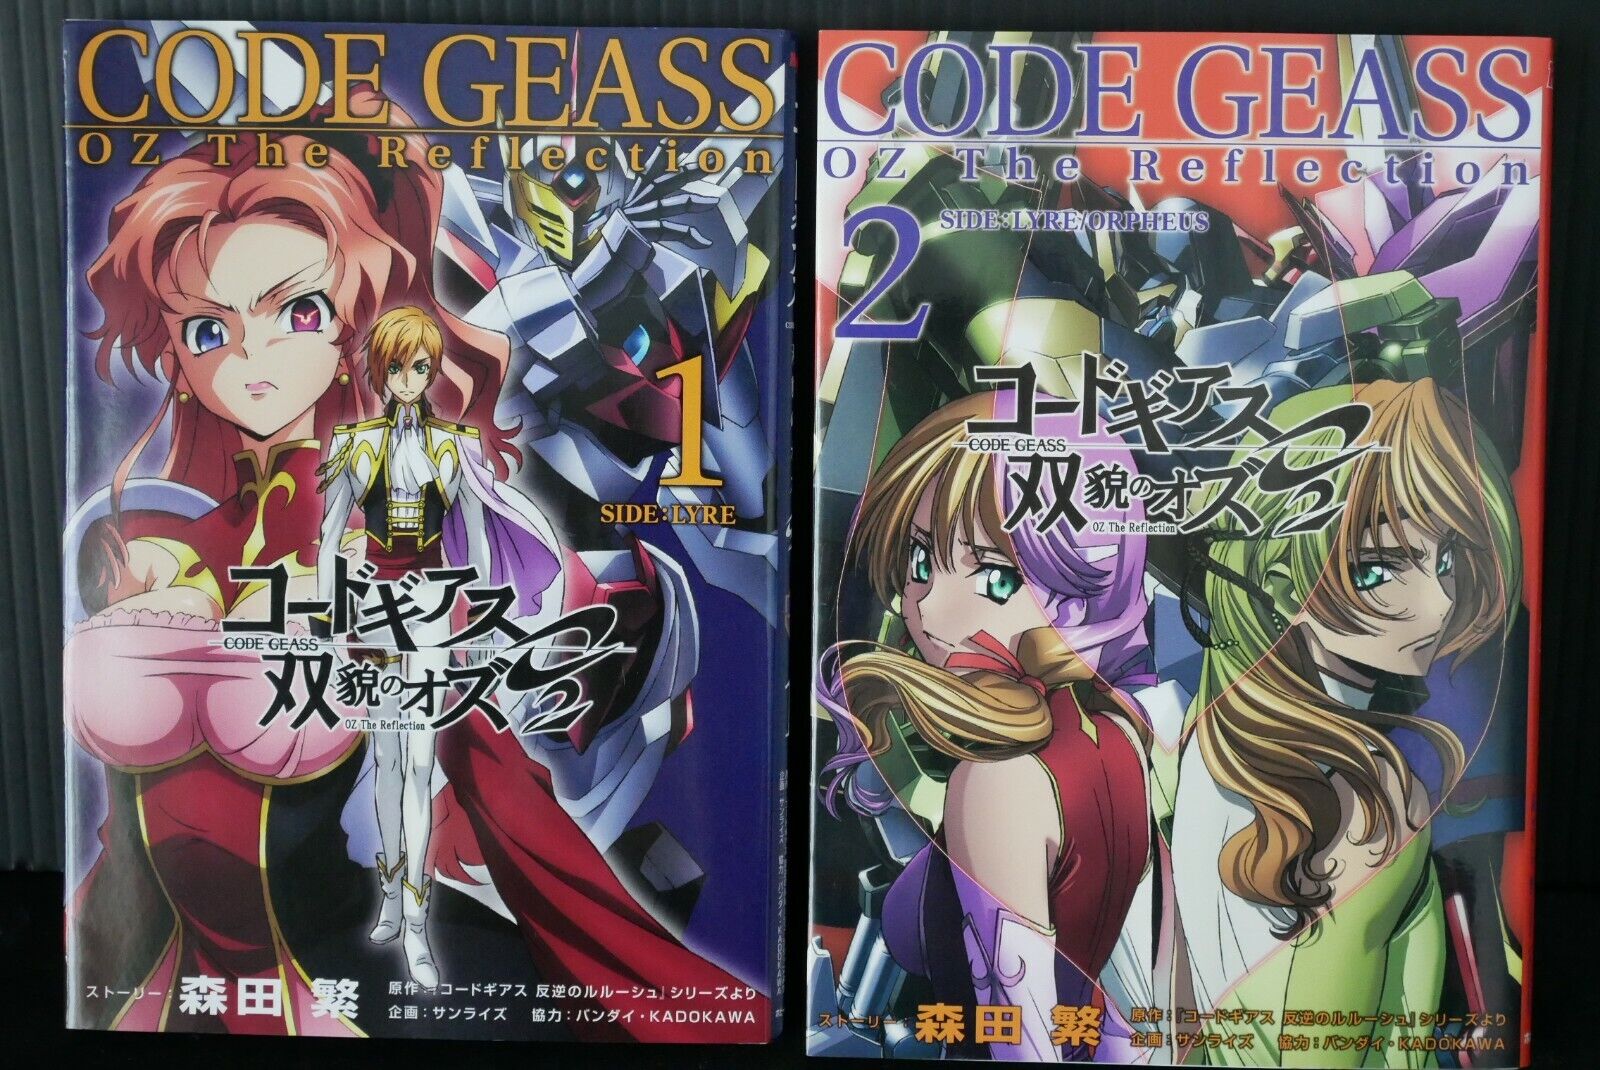 Code Geass: Oz Reflection Novels Vol.1+2 - Side:Lyre, Japan Import